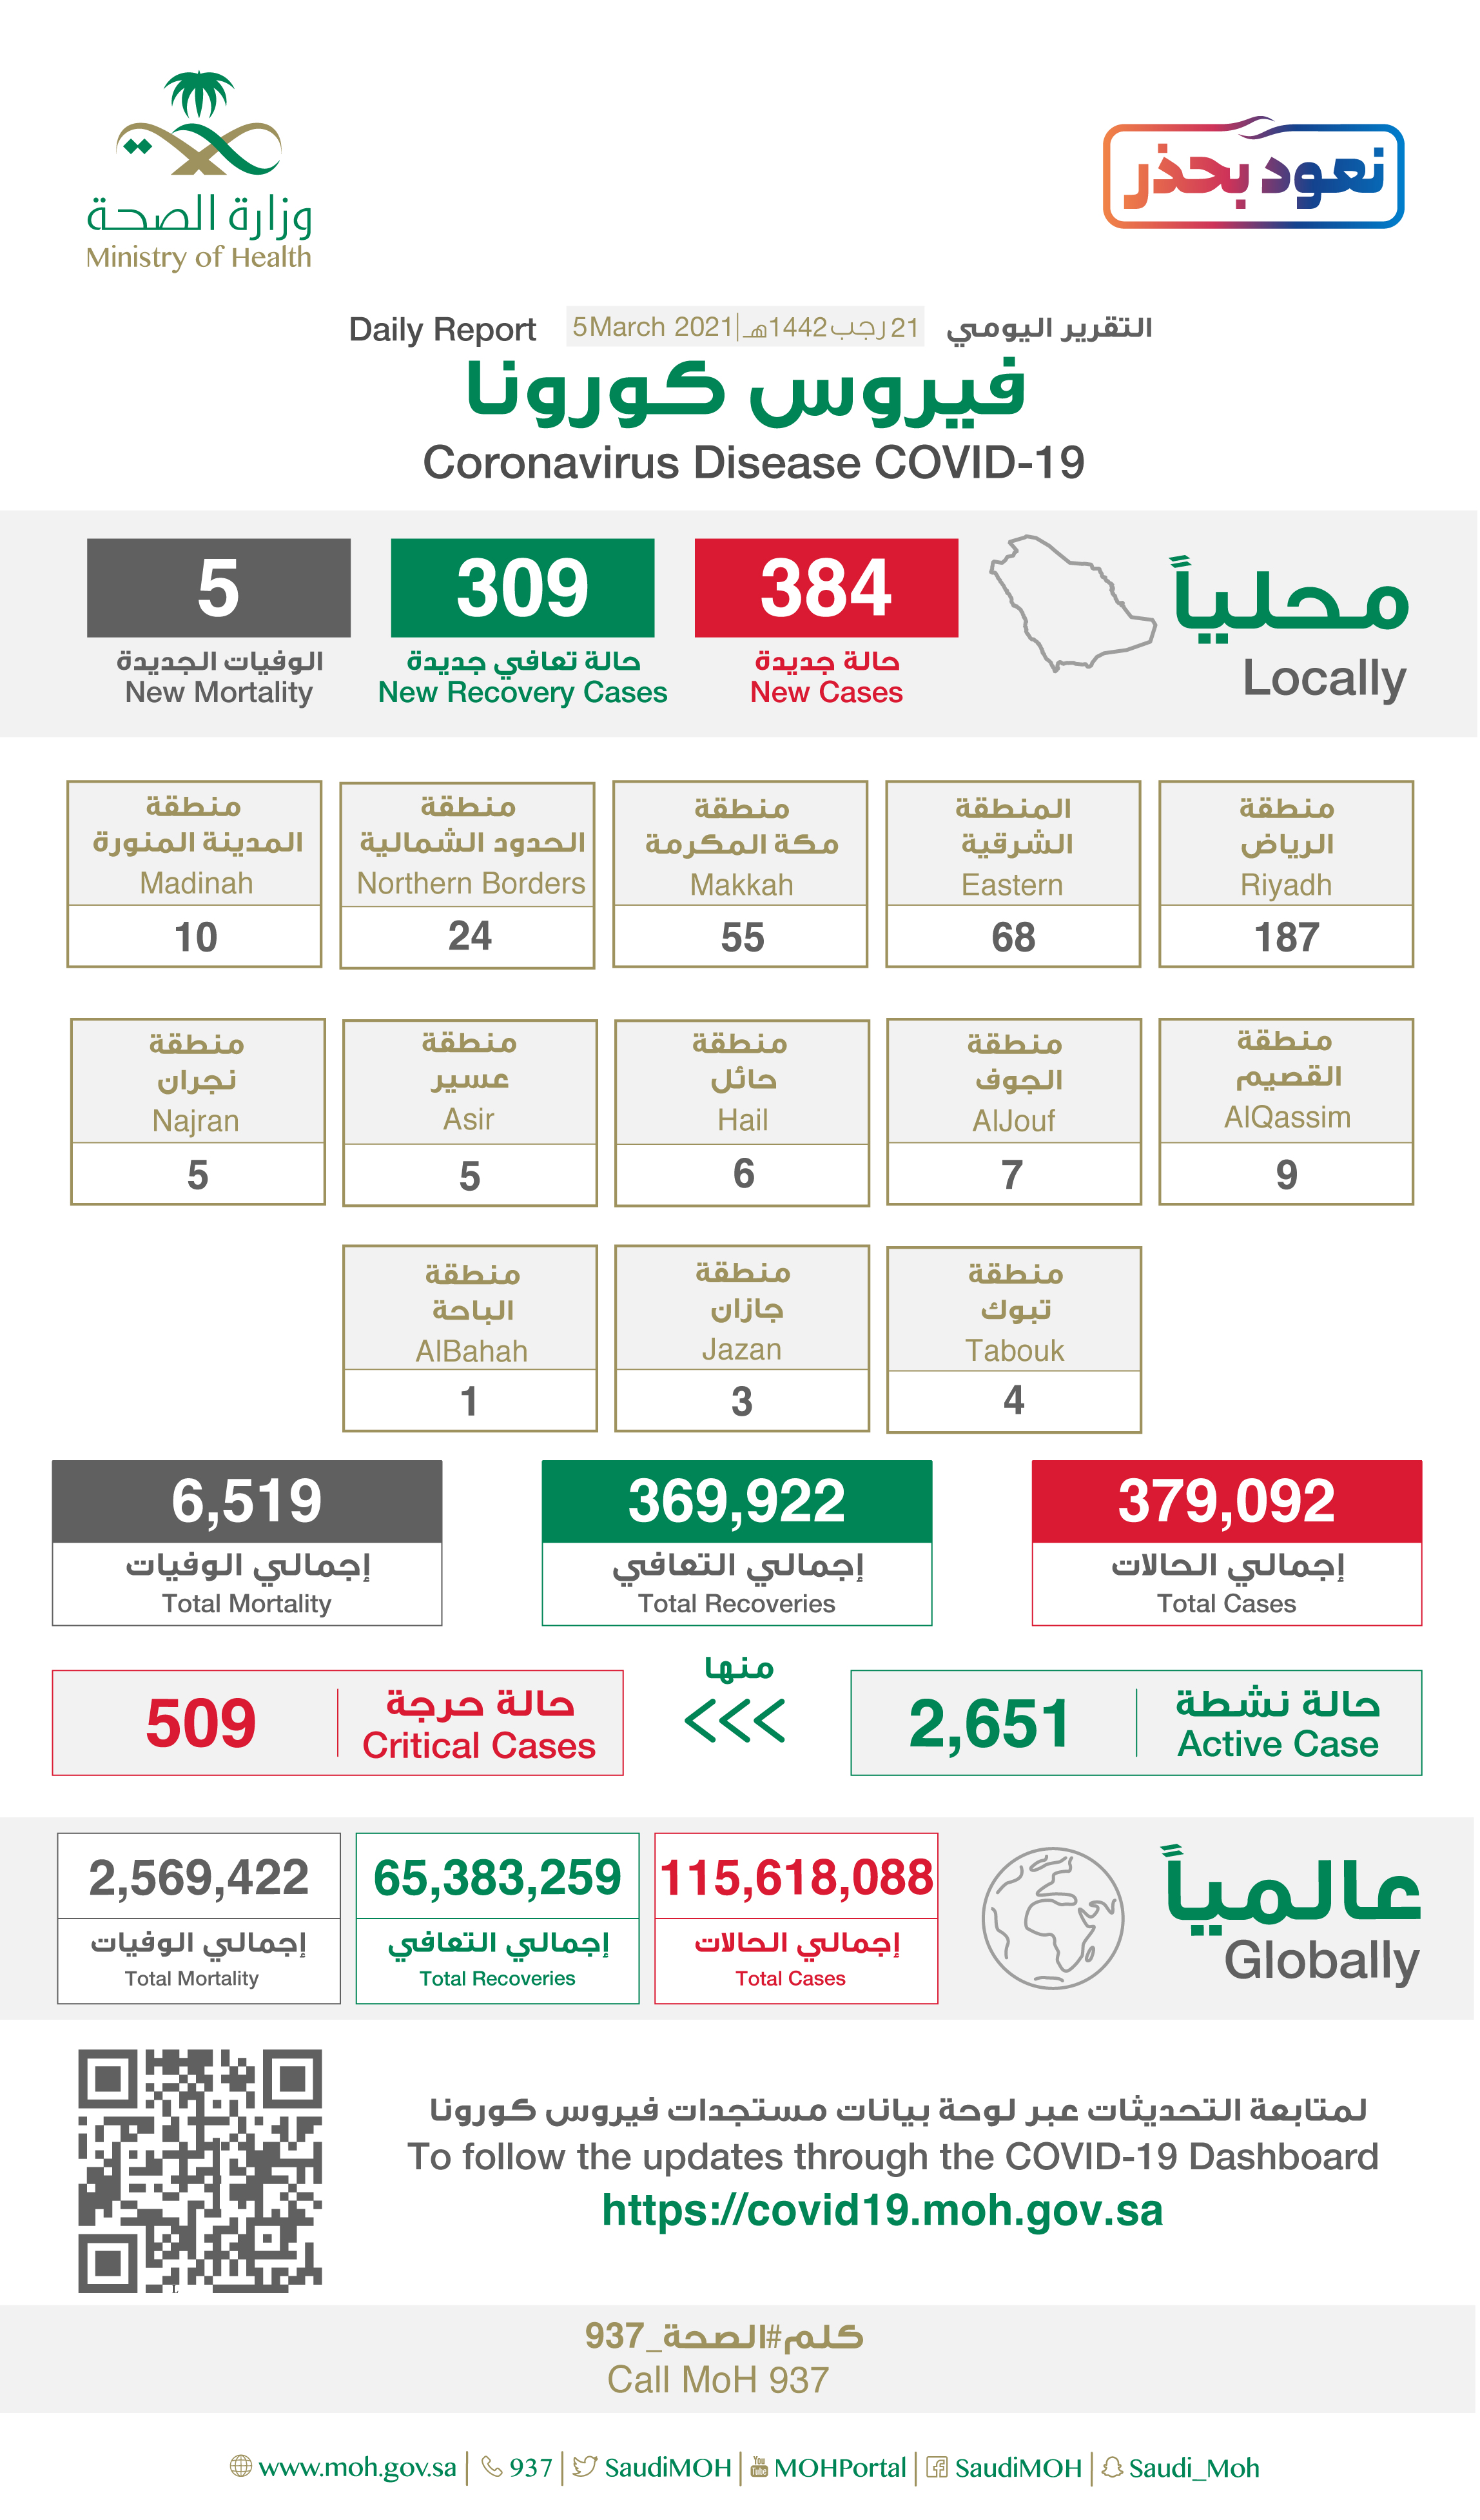 Saudi Arabia Coronavirus : Total Cases :379,092 , New Cases : 384, Cured : 369,922, Deaths: 6,519, Active Cases : 2,651